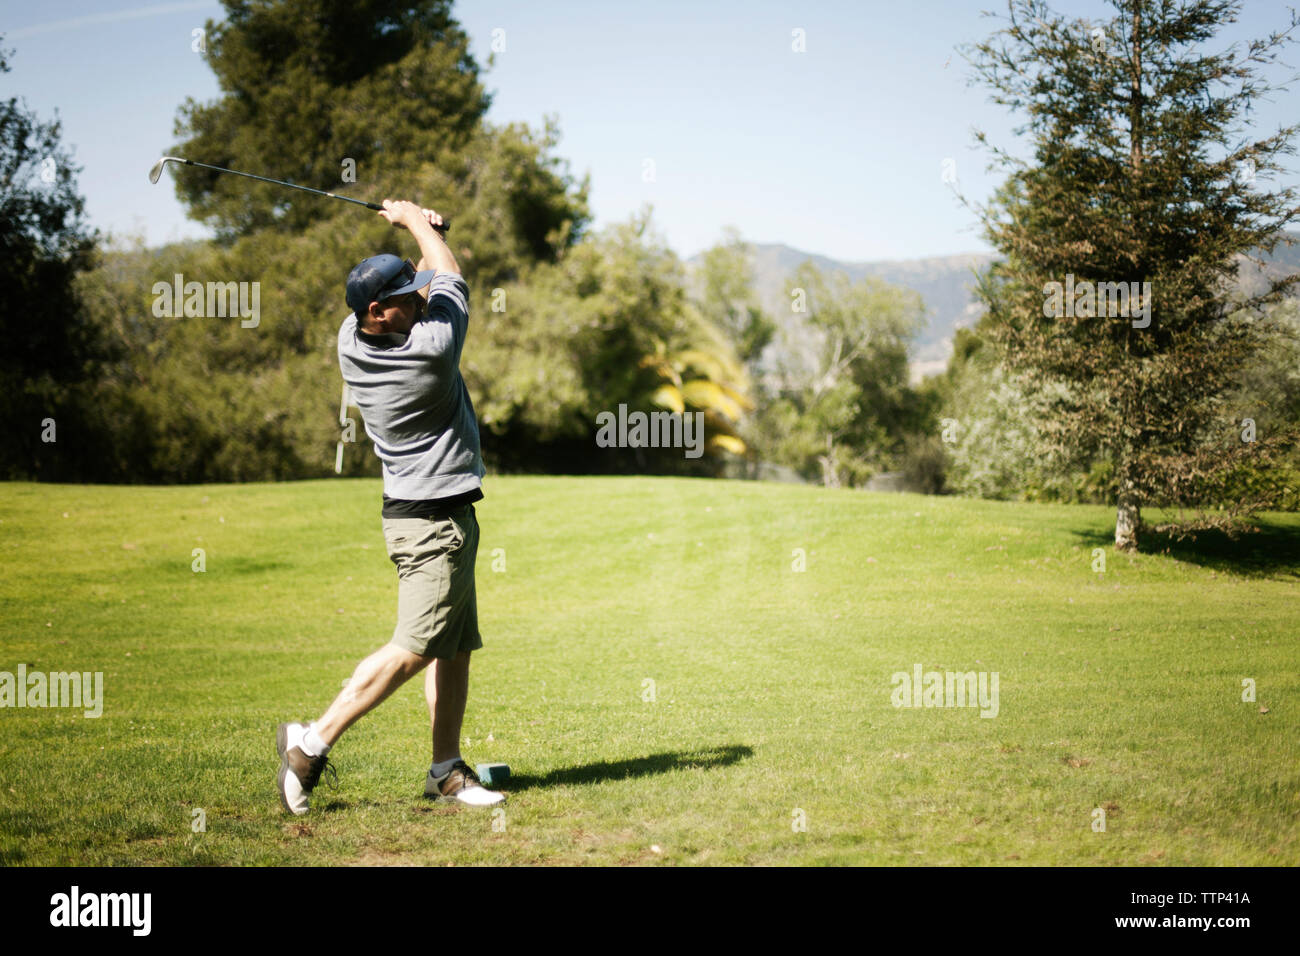 Man swinging golf club on golf course Stock Photo